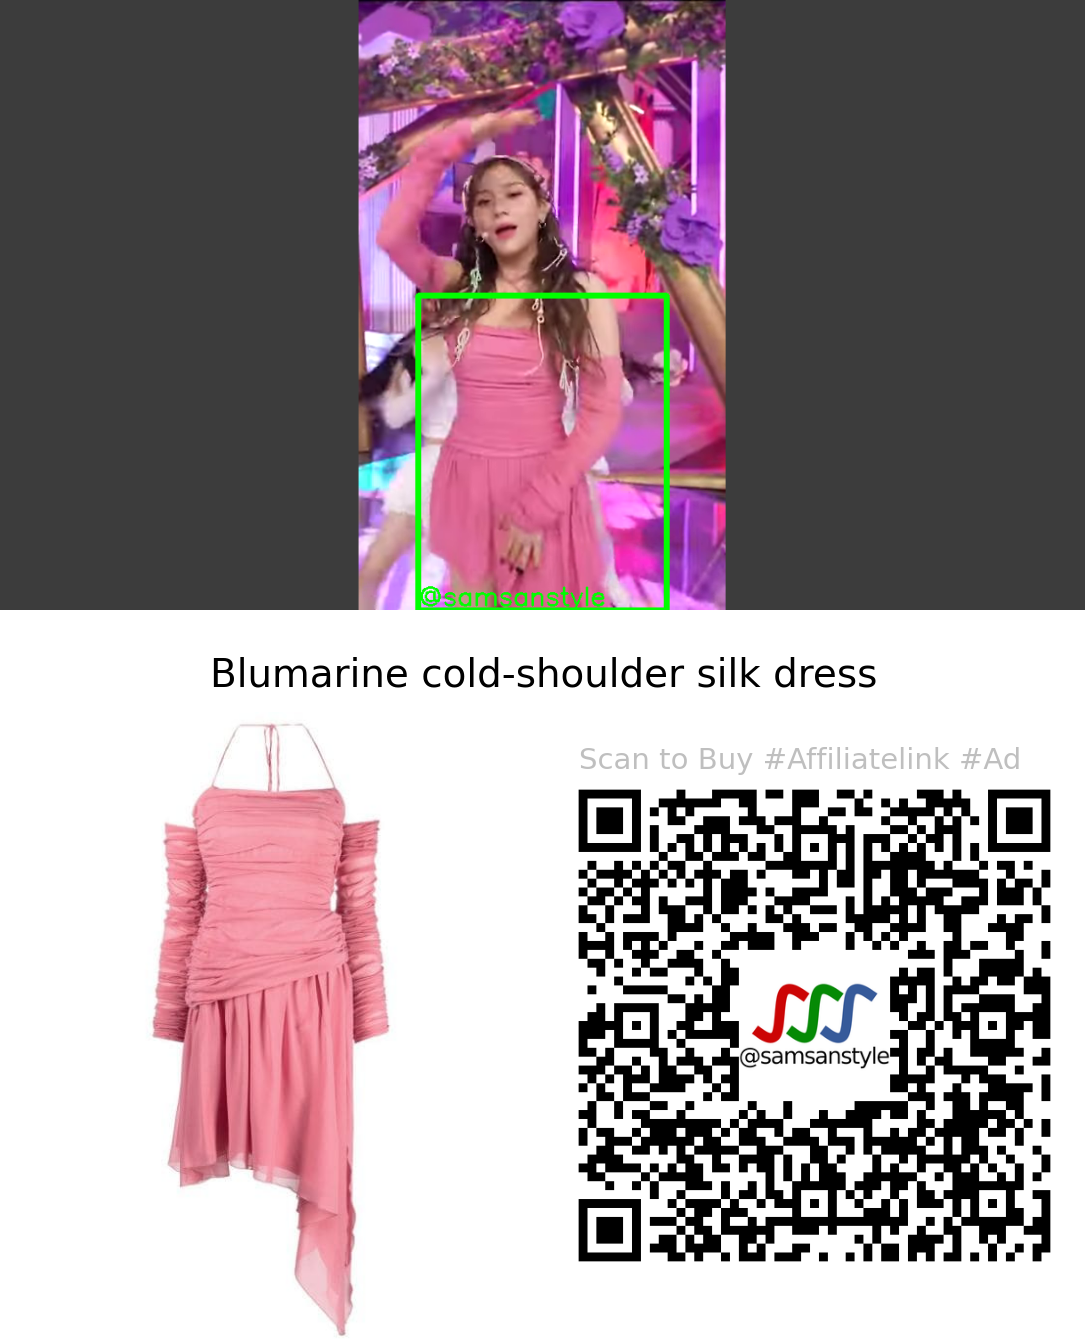 VIVIZ Umji | PULL UP SBS Inkigayo | Blumarine cold-shoulder silk dress